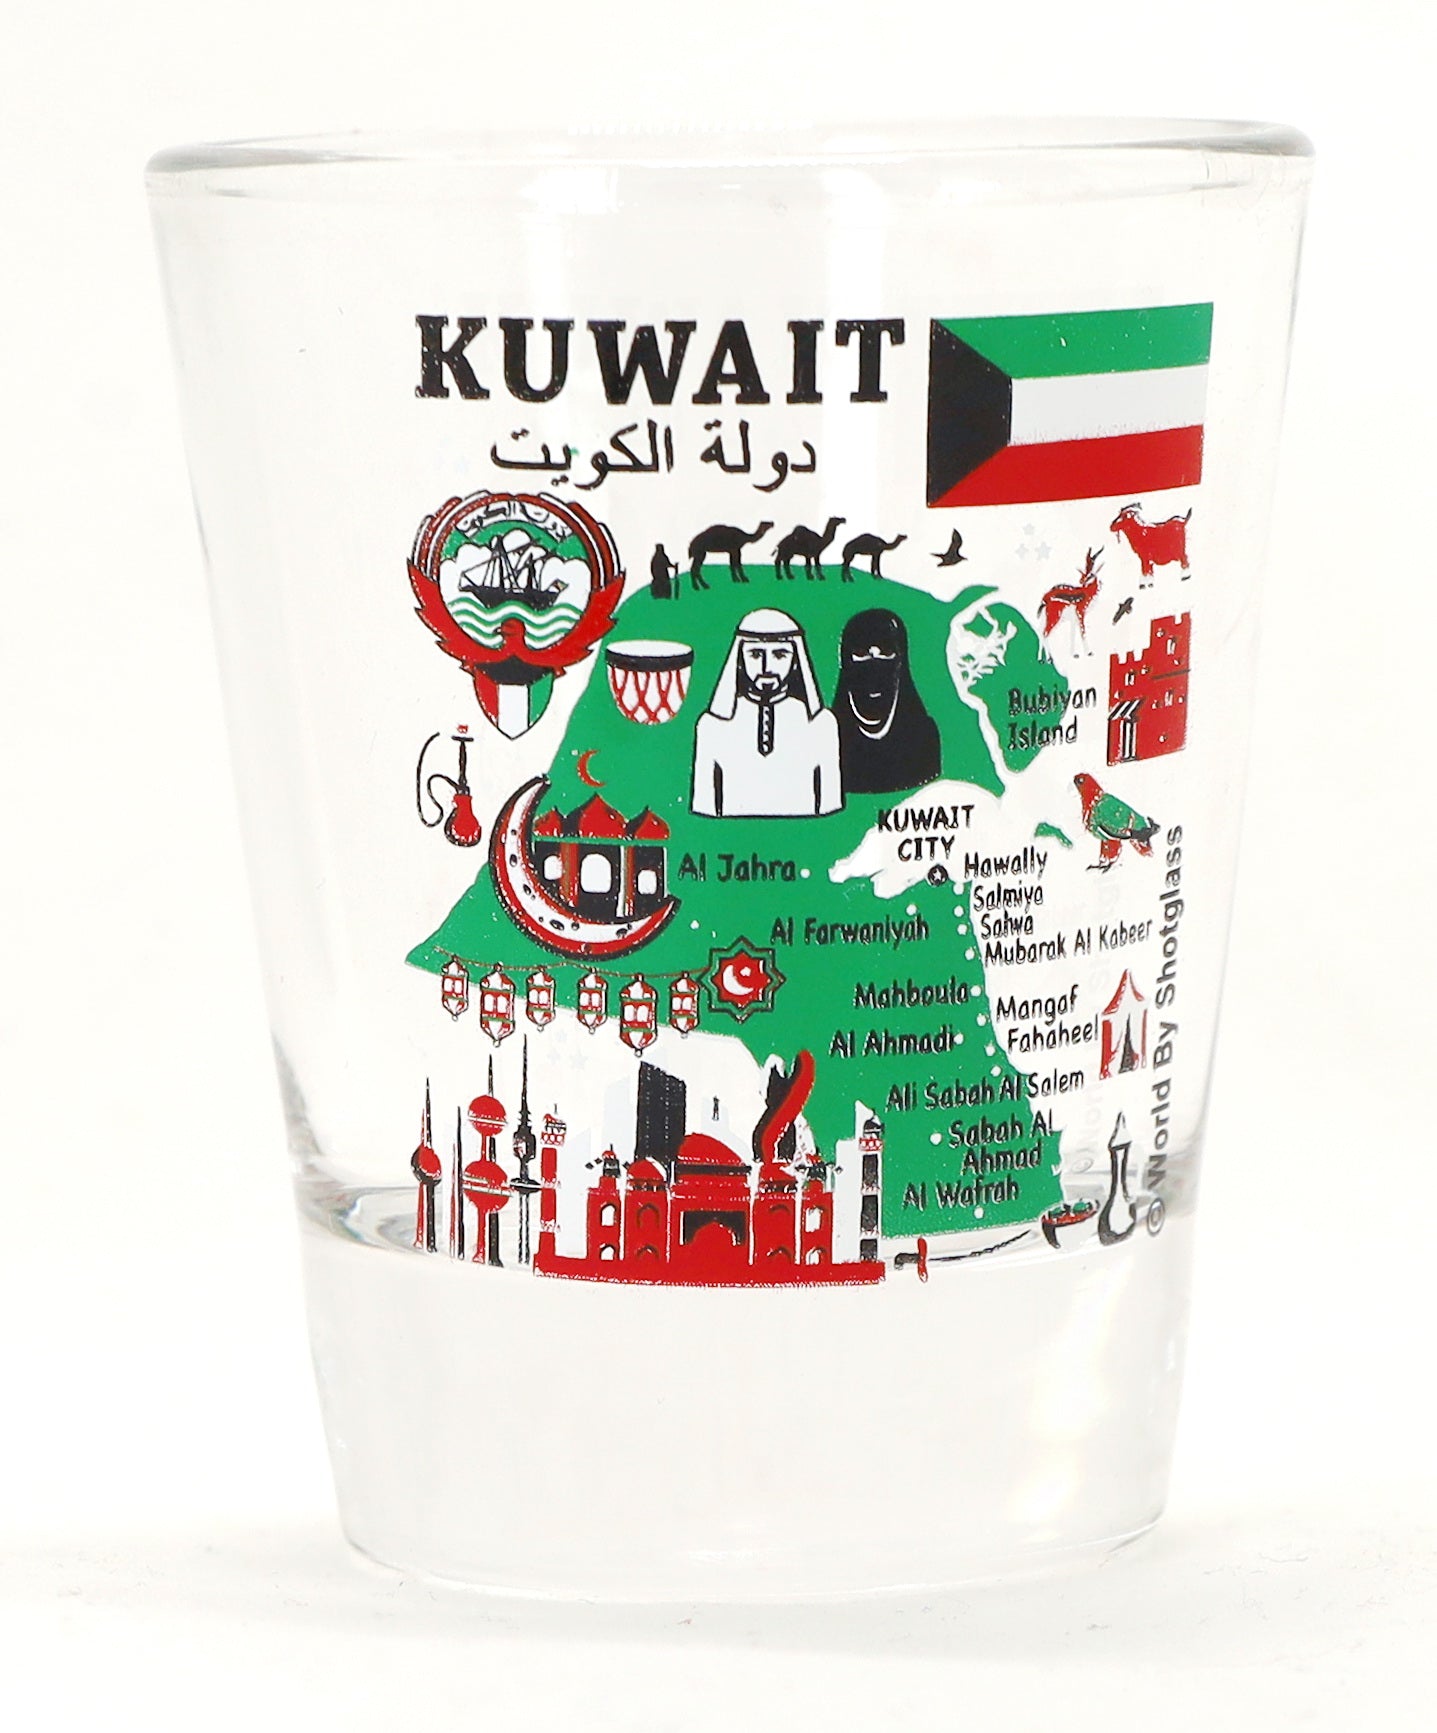 Kuwait Landmarks and Icons Collage Shot Glass